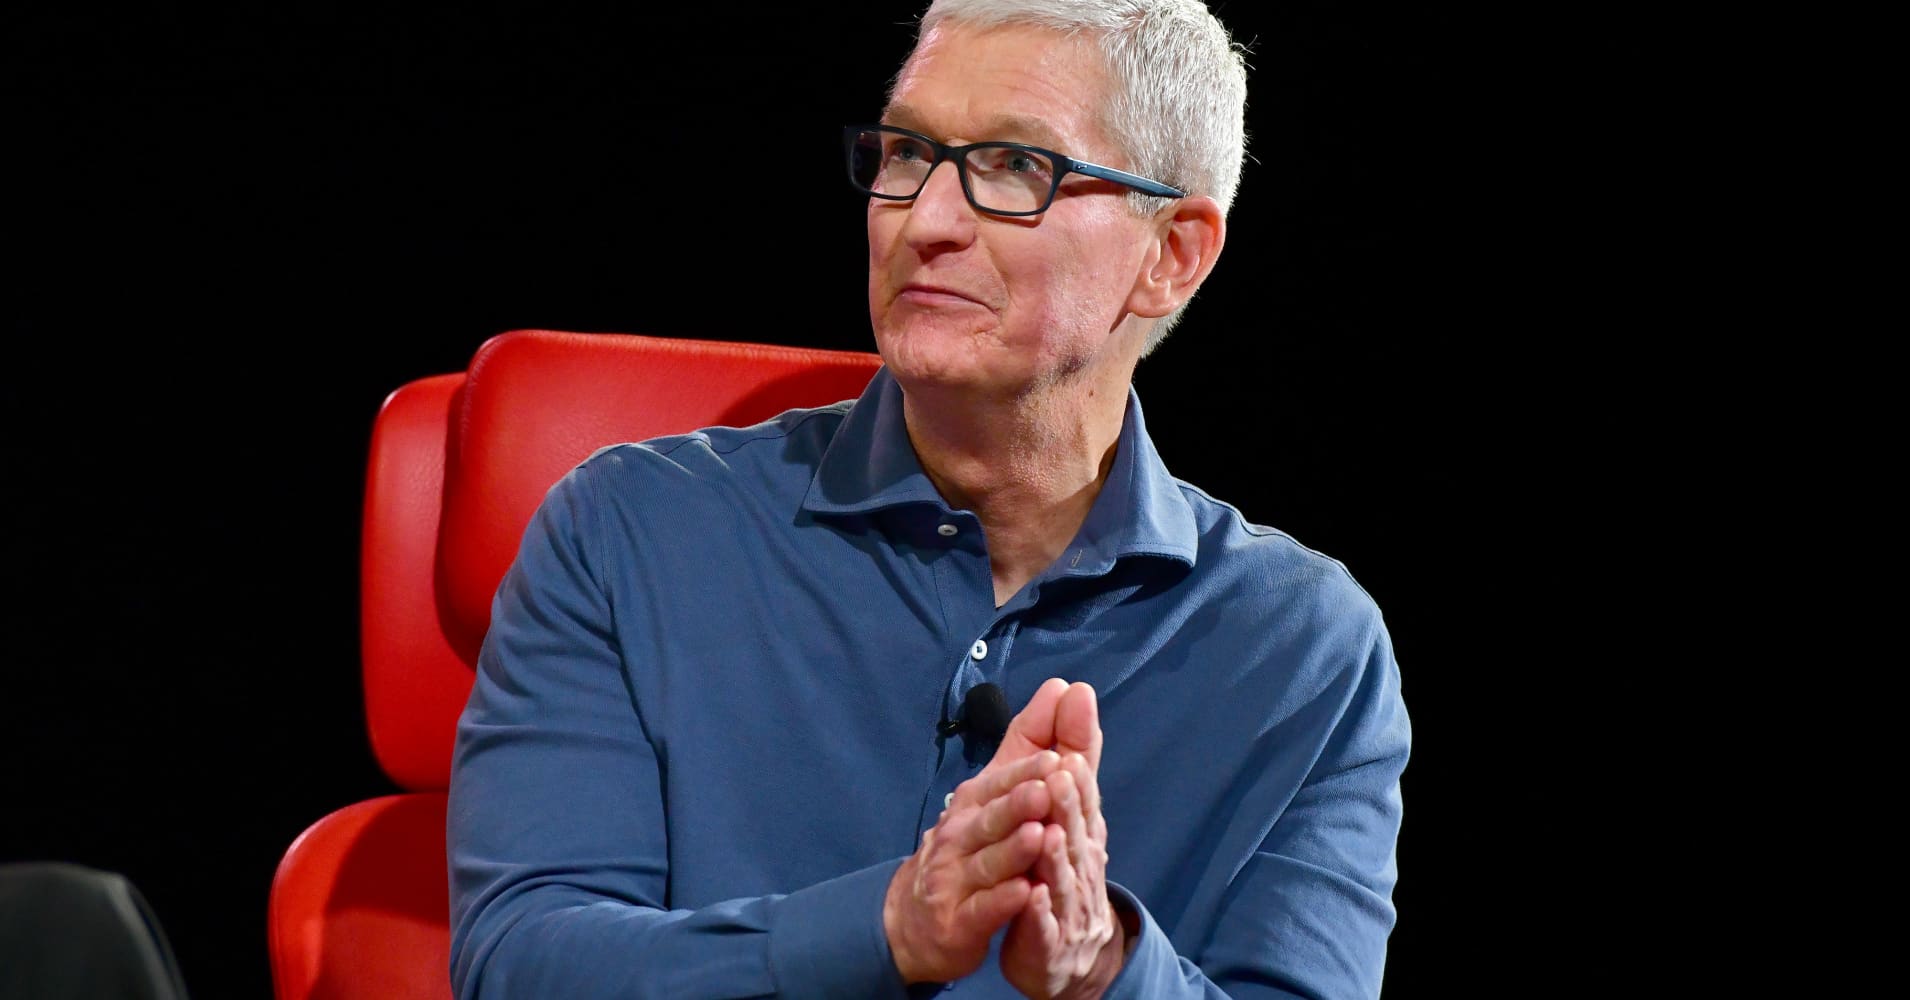 microsoft, android, doj sues apple over iphone monopoly in landmark antitrust case